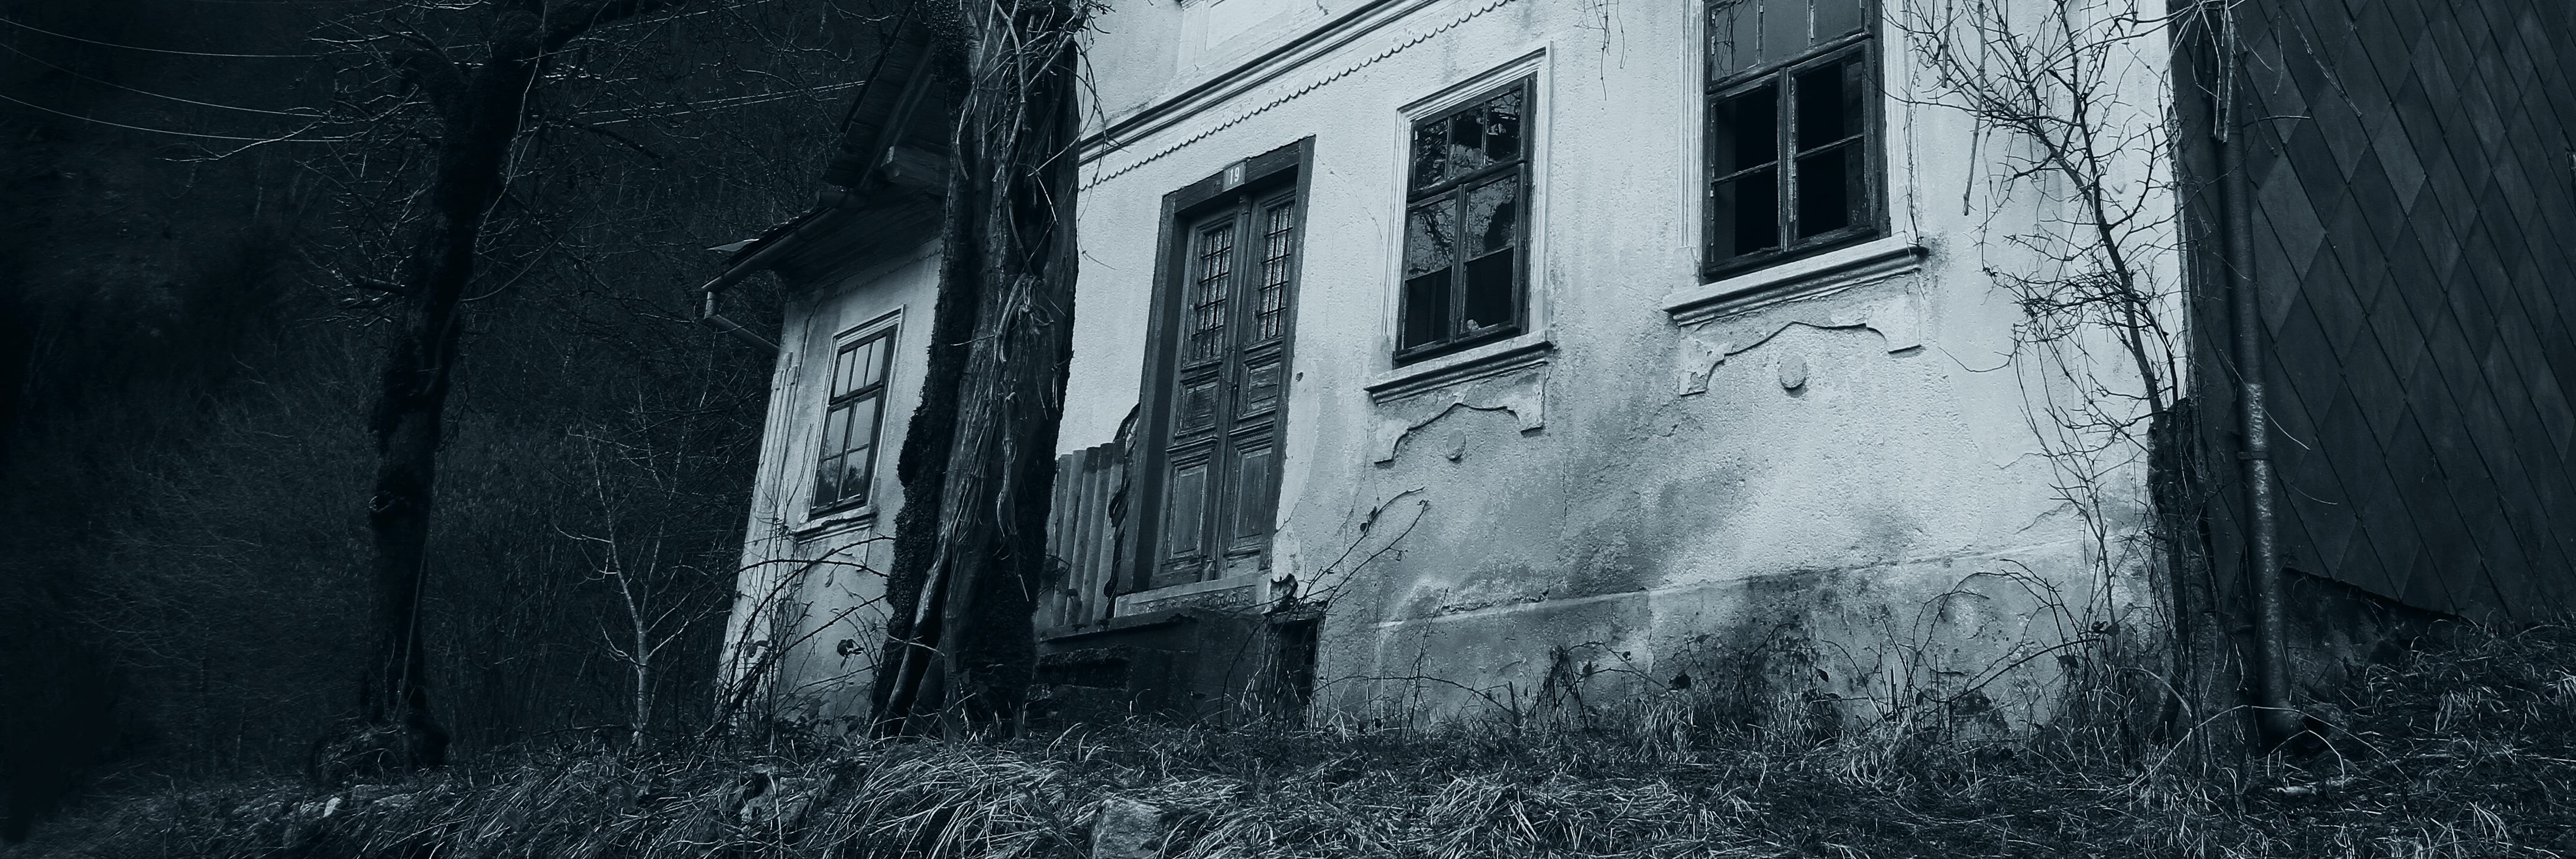 monochrome image of horror movie house abandoned spooky